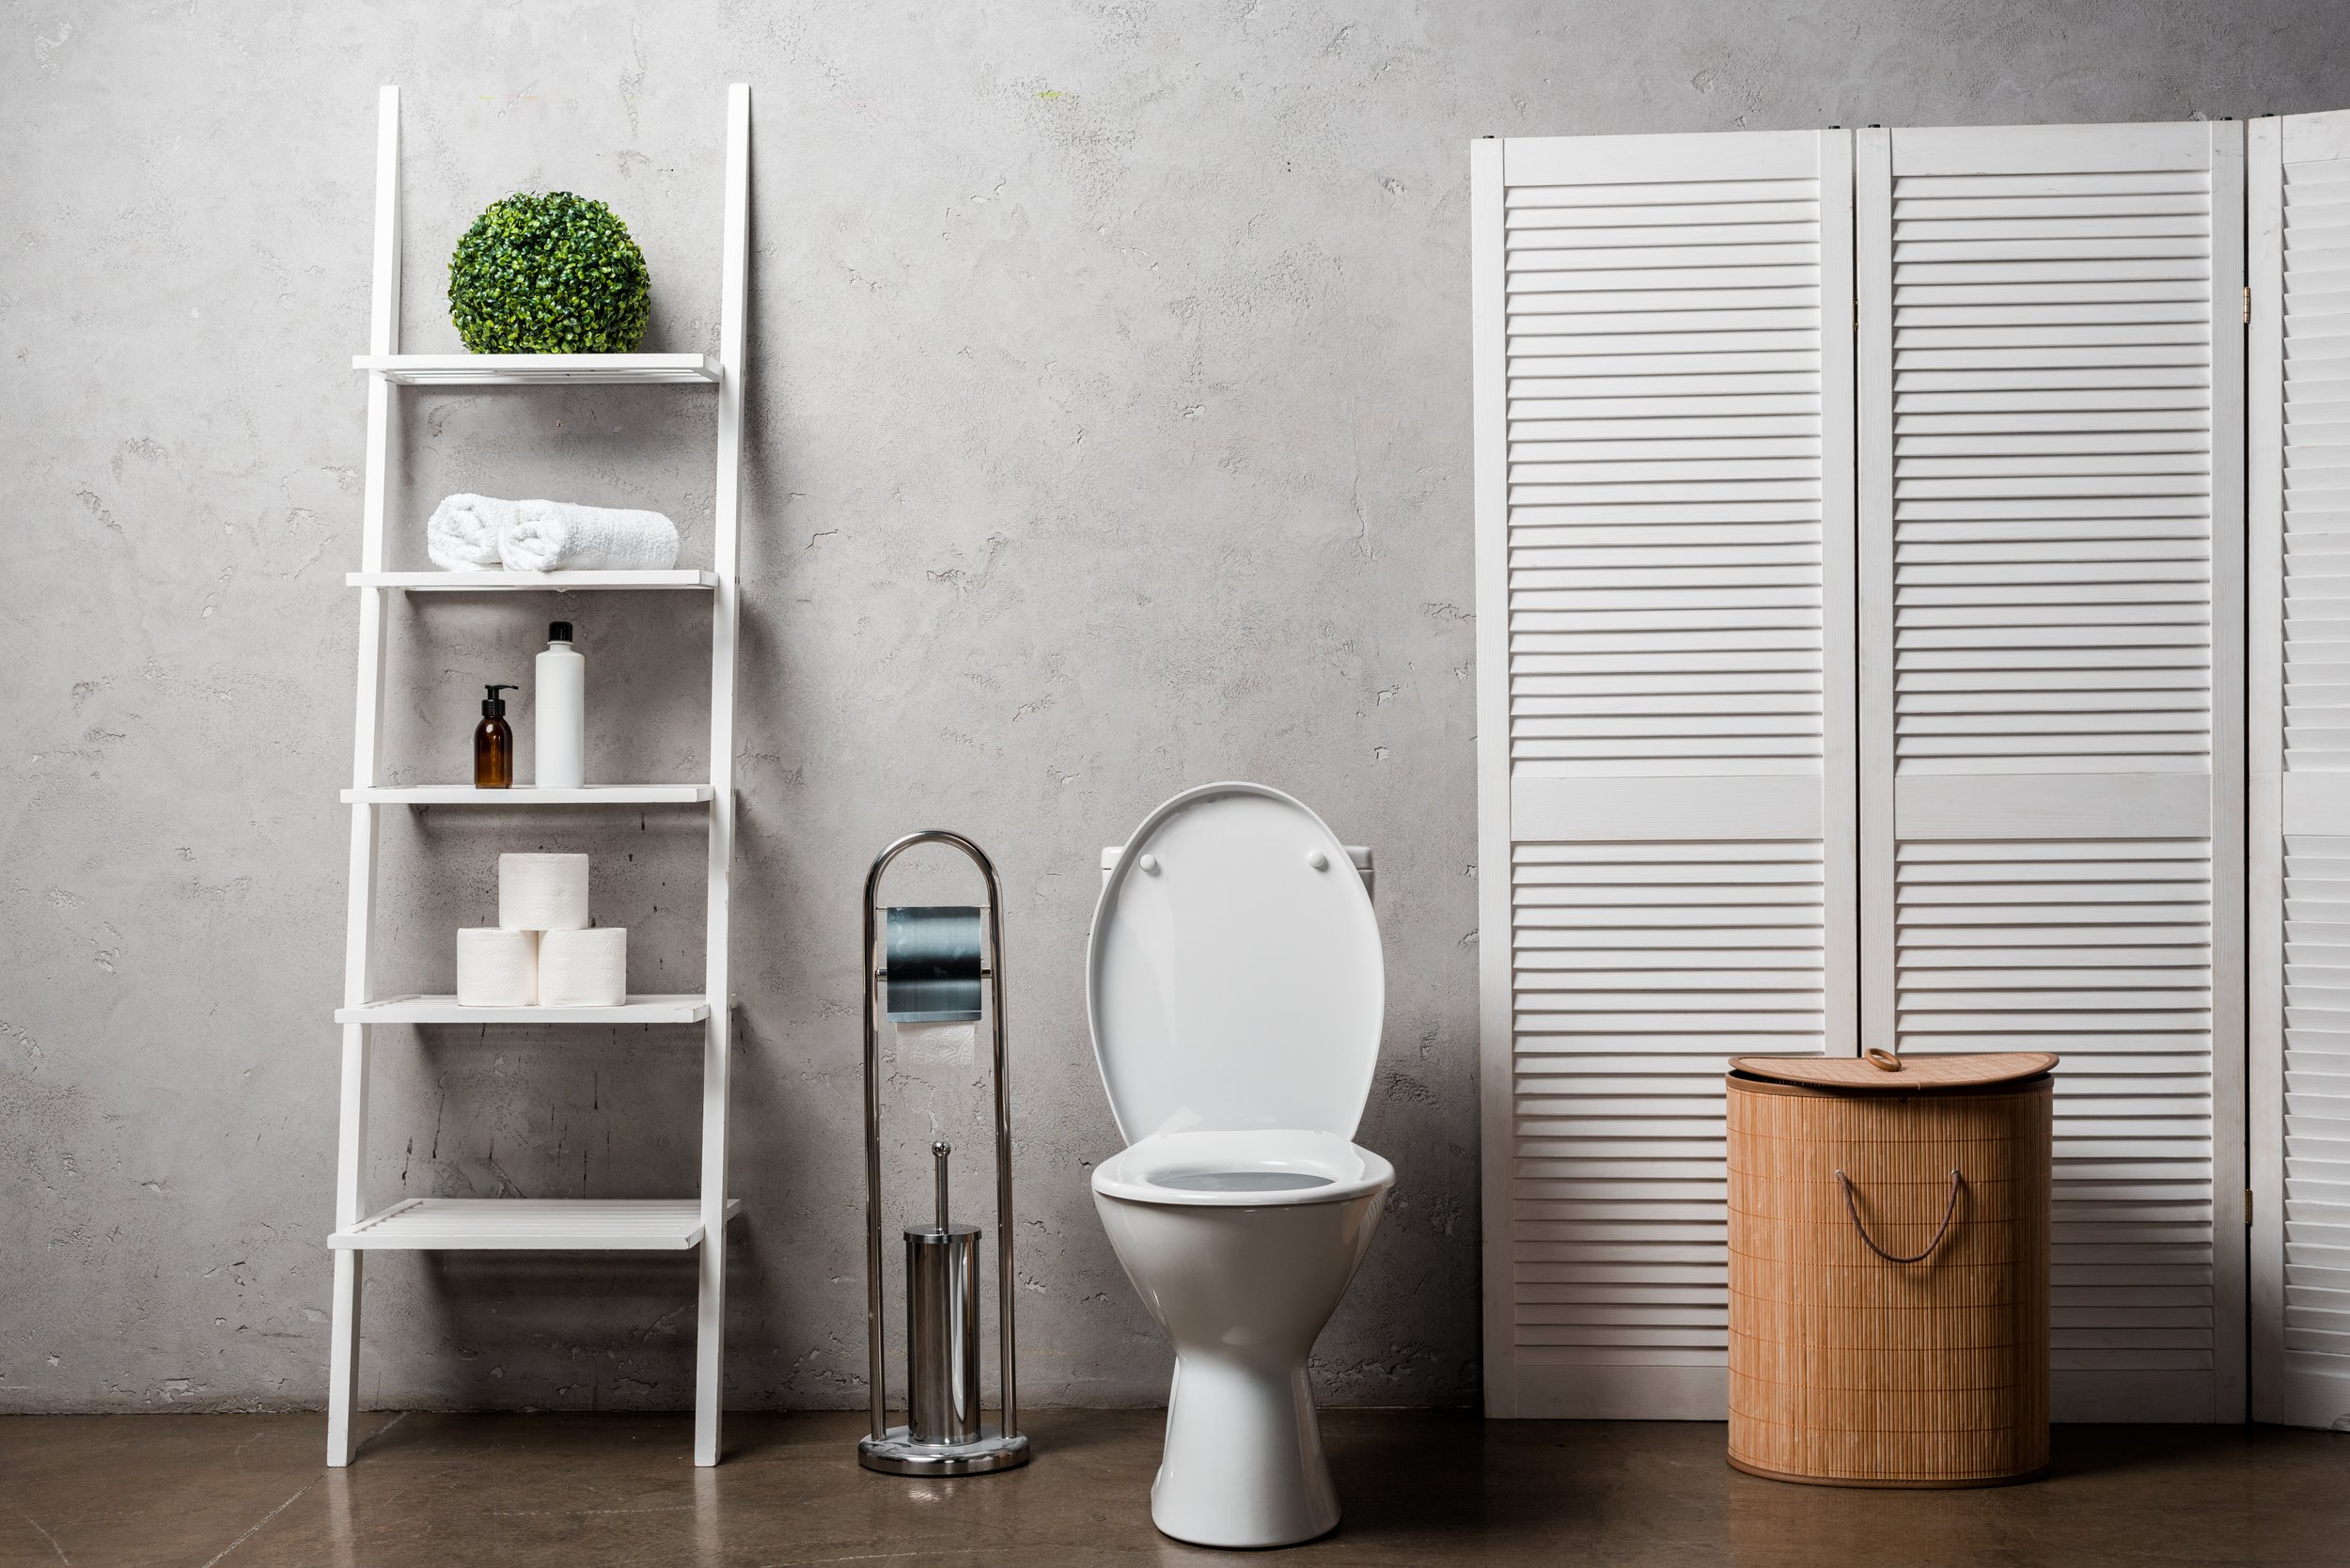 9 Minimalist Bathroom Decor Ideas for a Clutter-Free Look